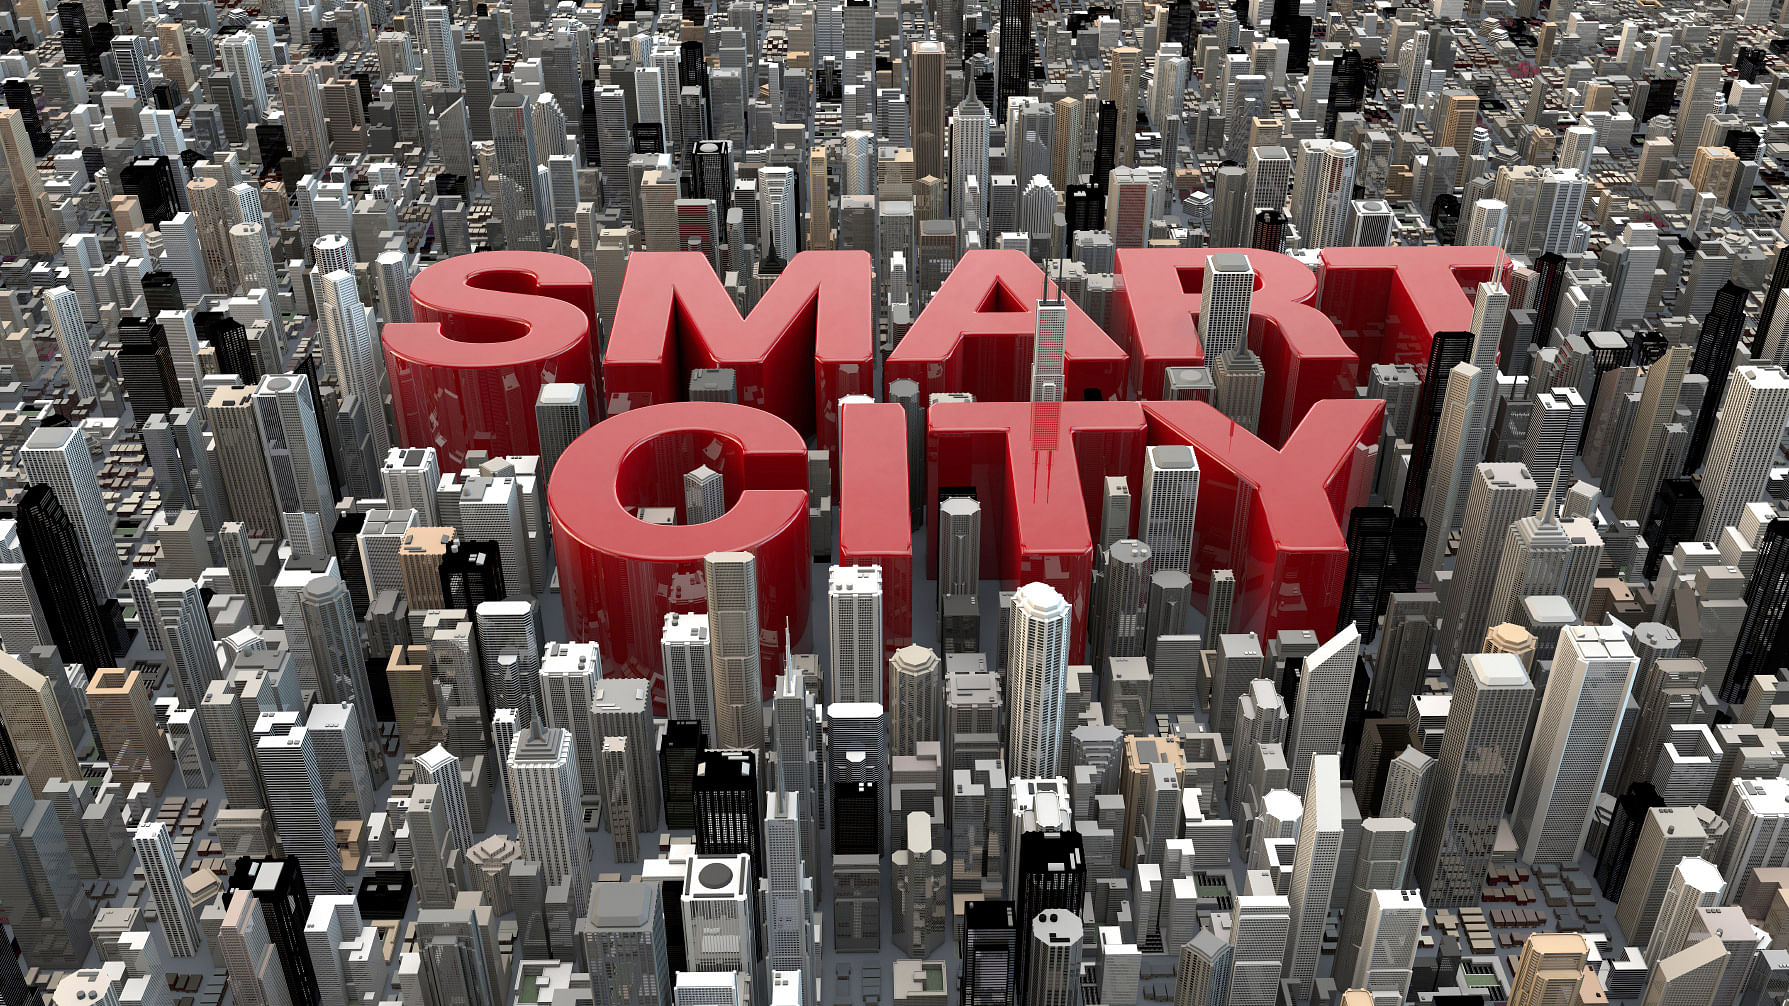 Prime Minister Narendra Modi had announced the development of 100 smart cities across India in 2015.